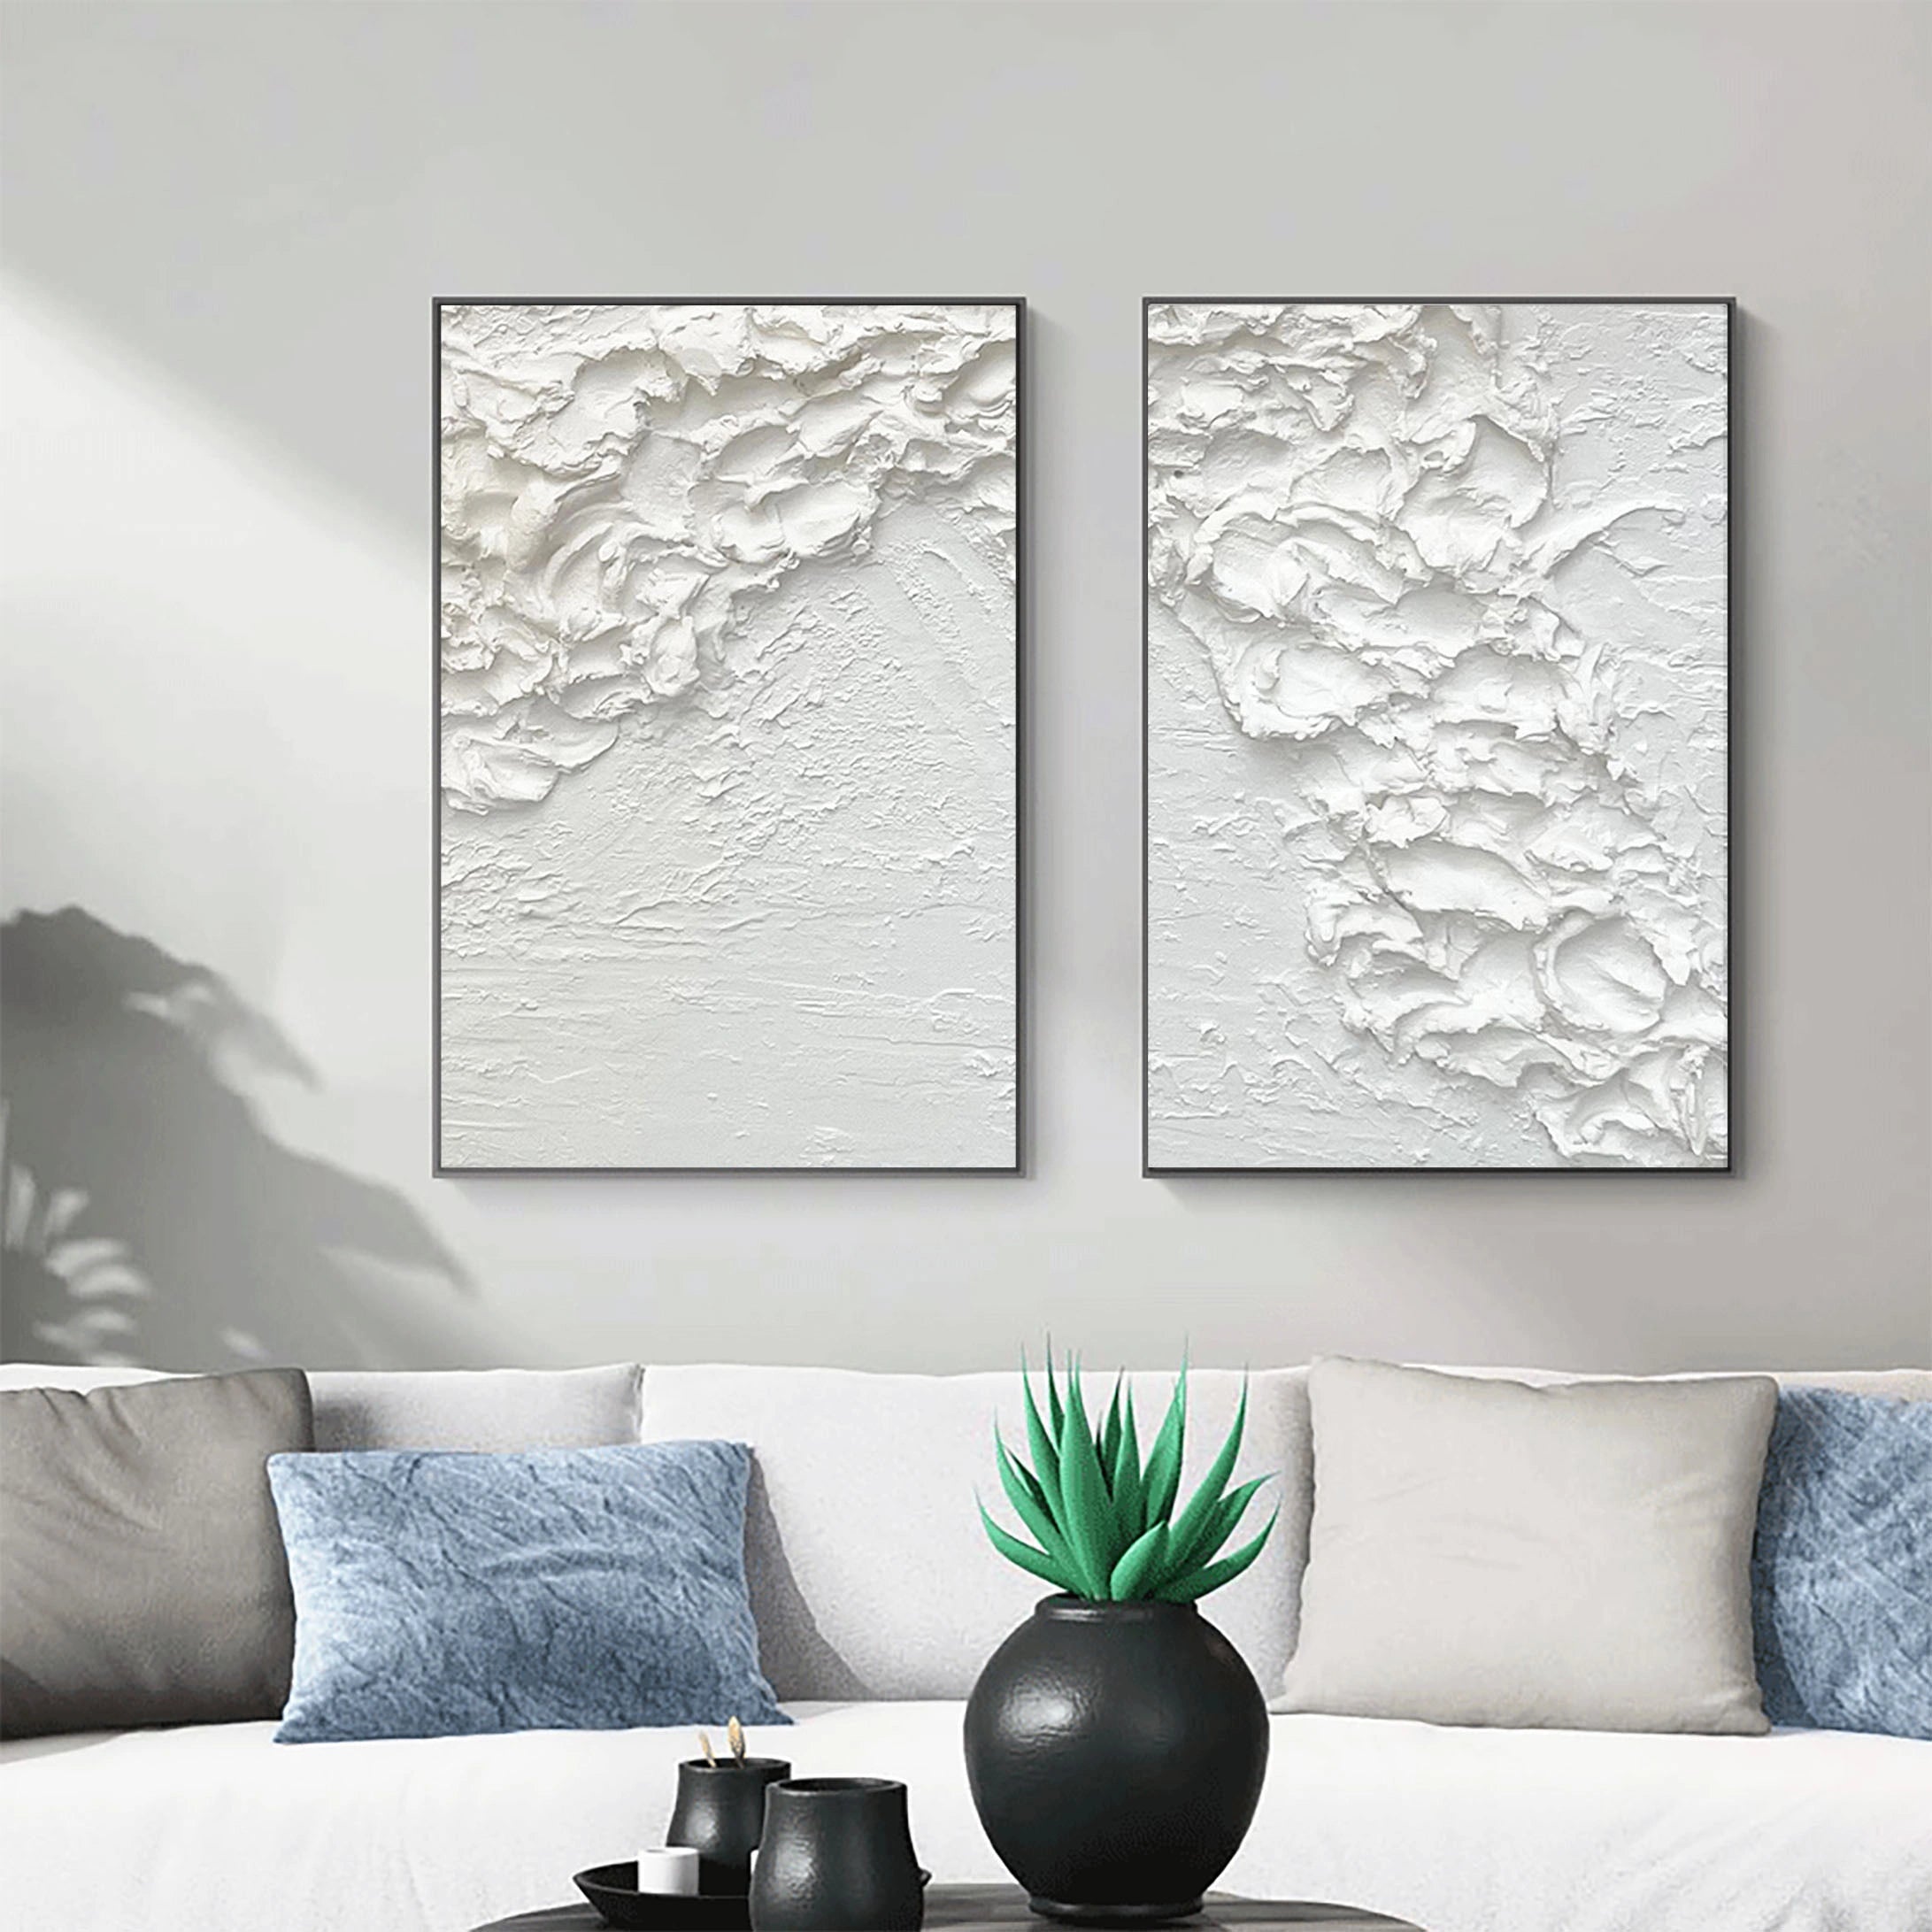 White Ocean Waves Textured Plaster Art, Large Minimalist Painting On Canvas, Modern Wall Decor